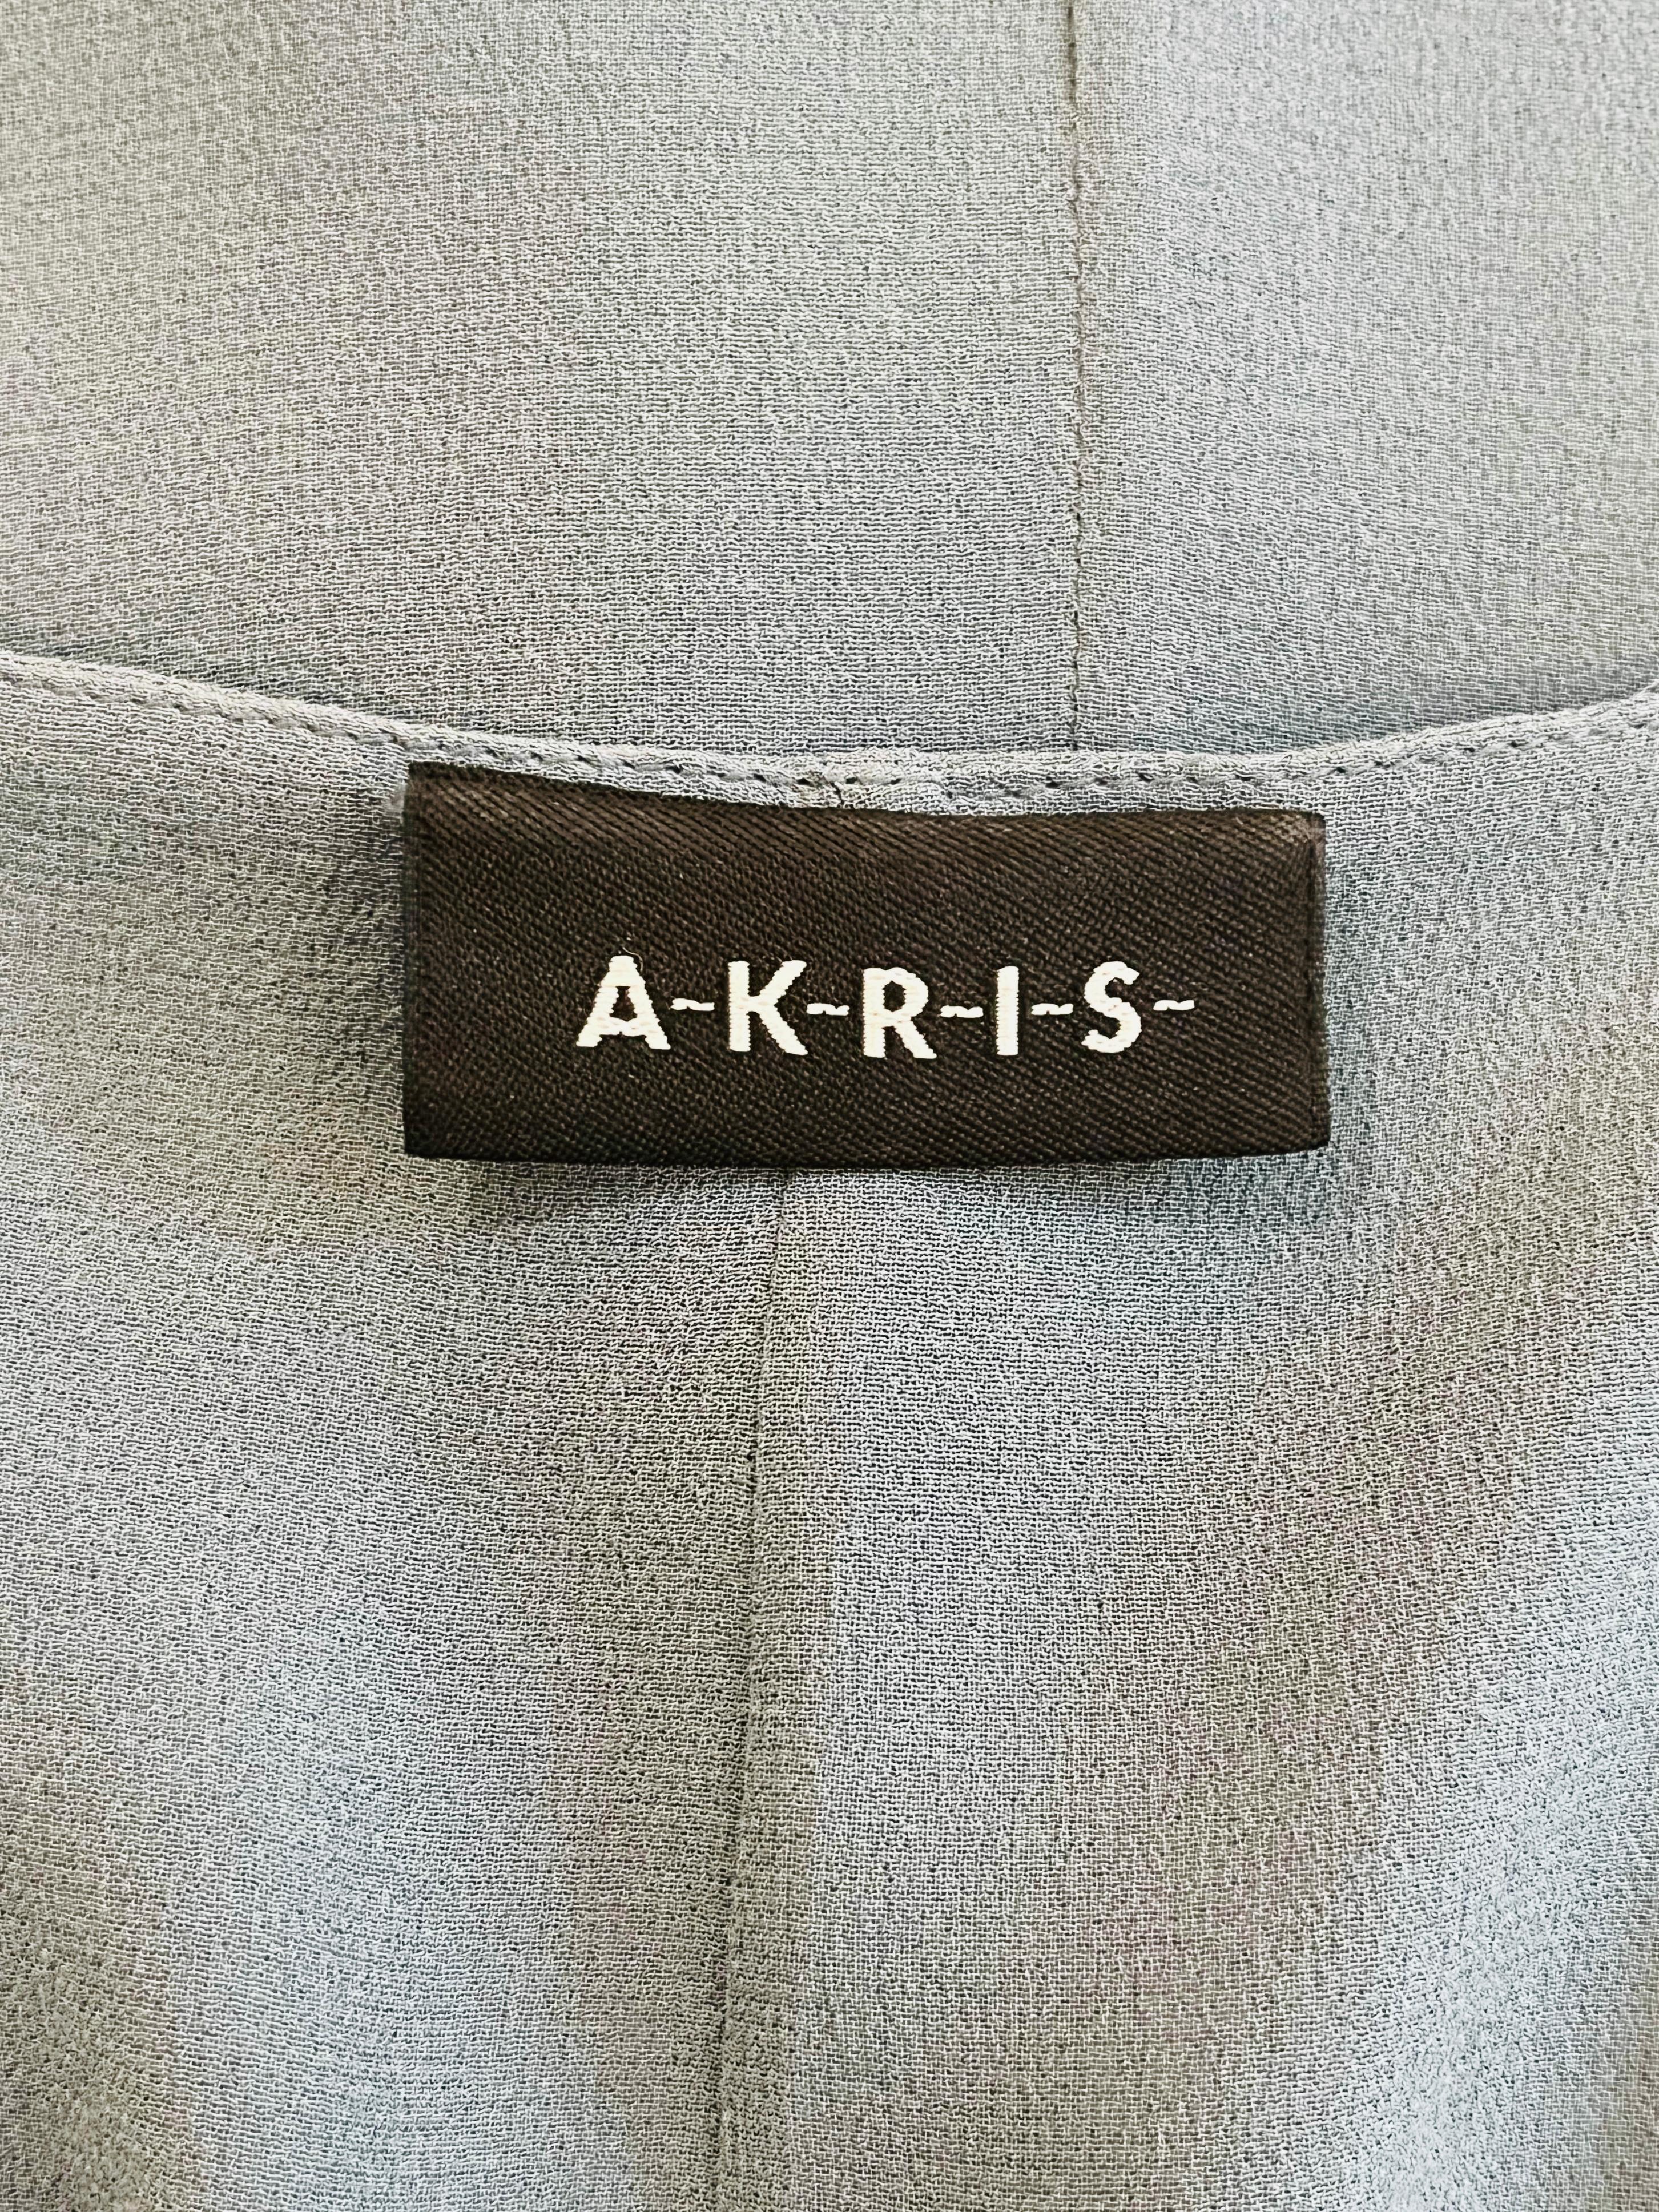 Akris Sleeveless Silk Top For Sale 1